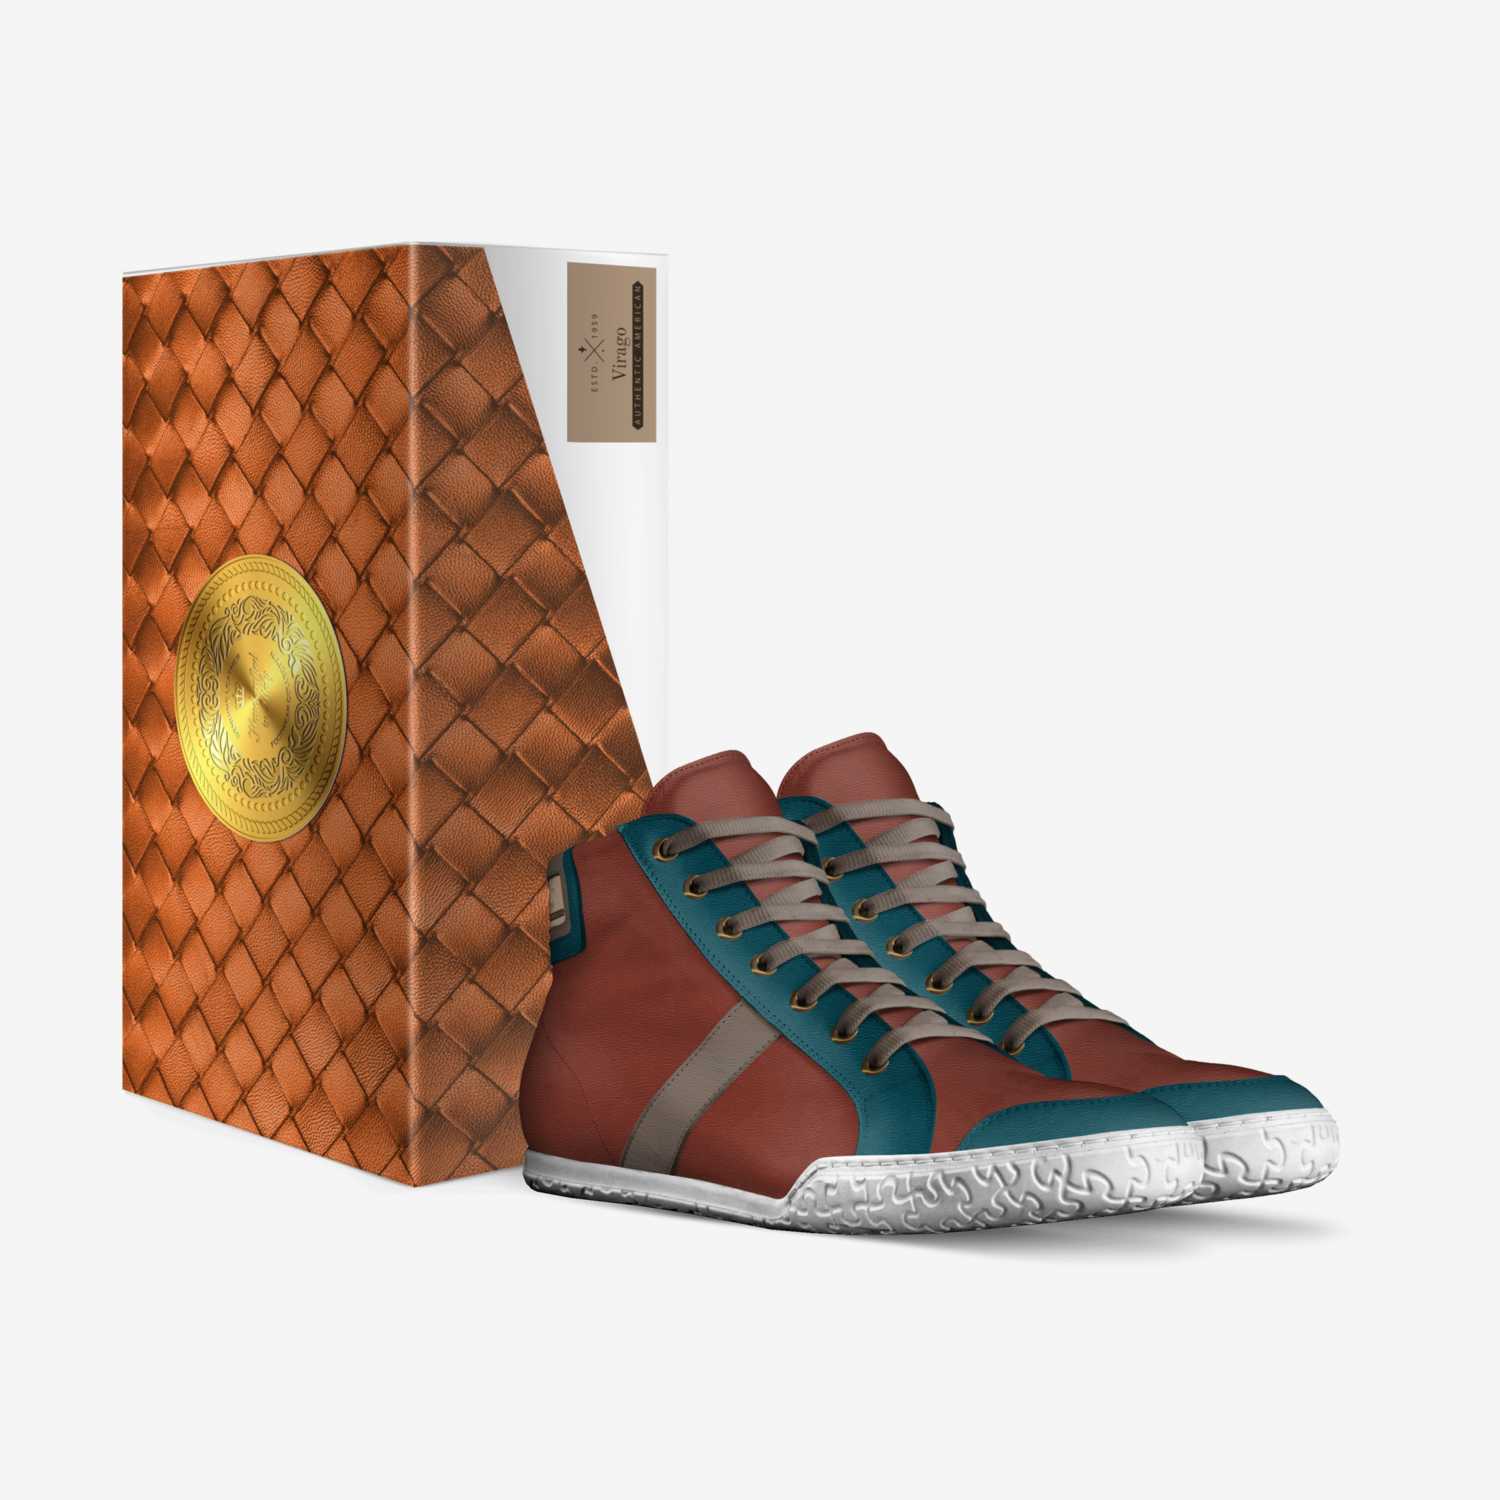 Virago custom made in Italy shoes by S. Antoinette Elder | Box view